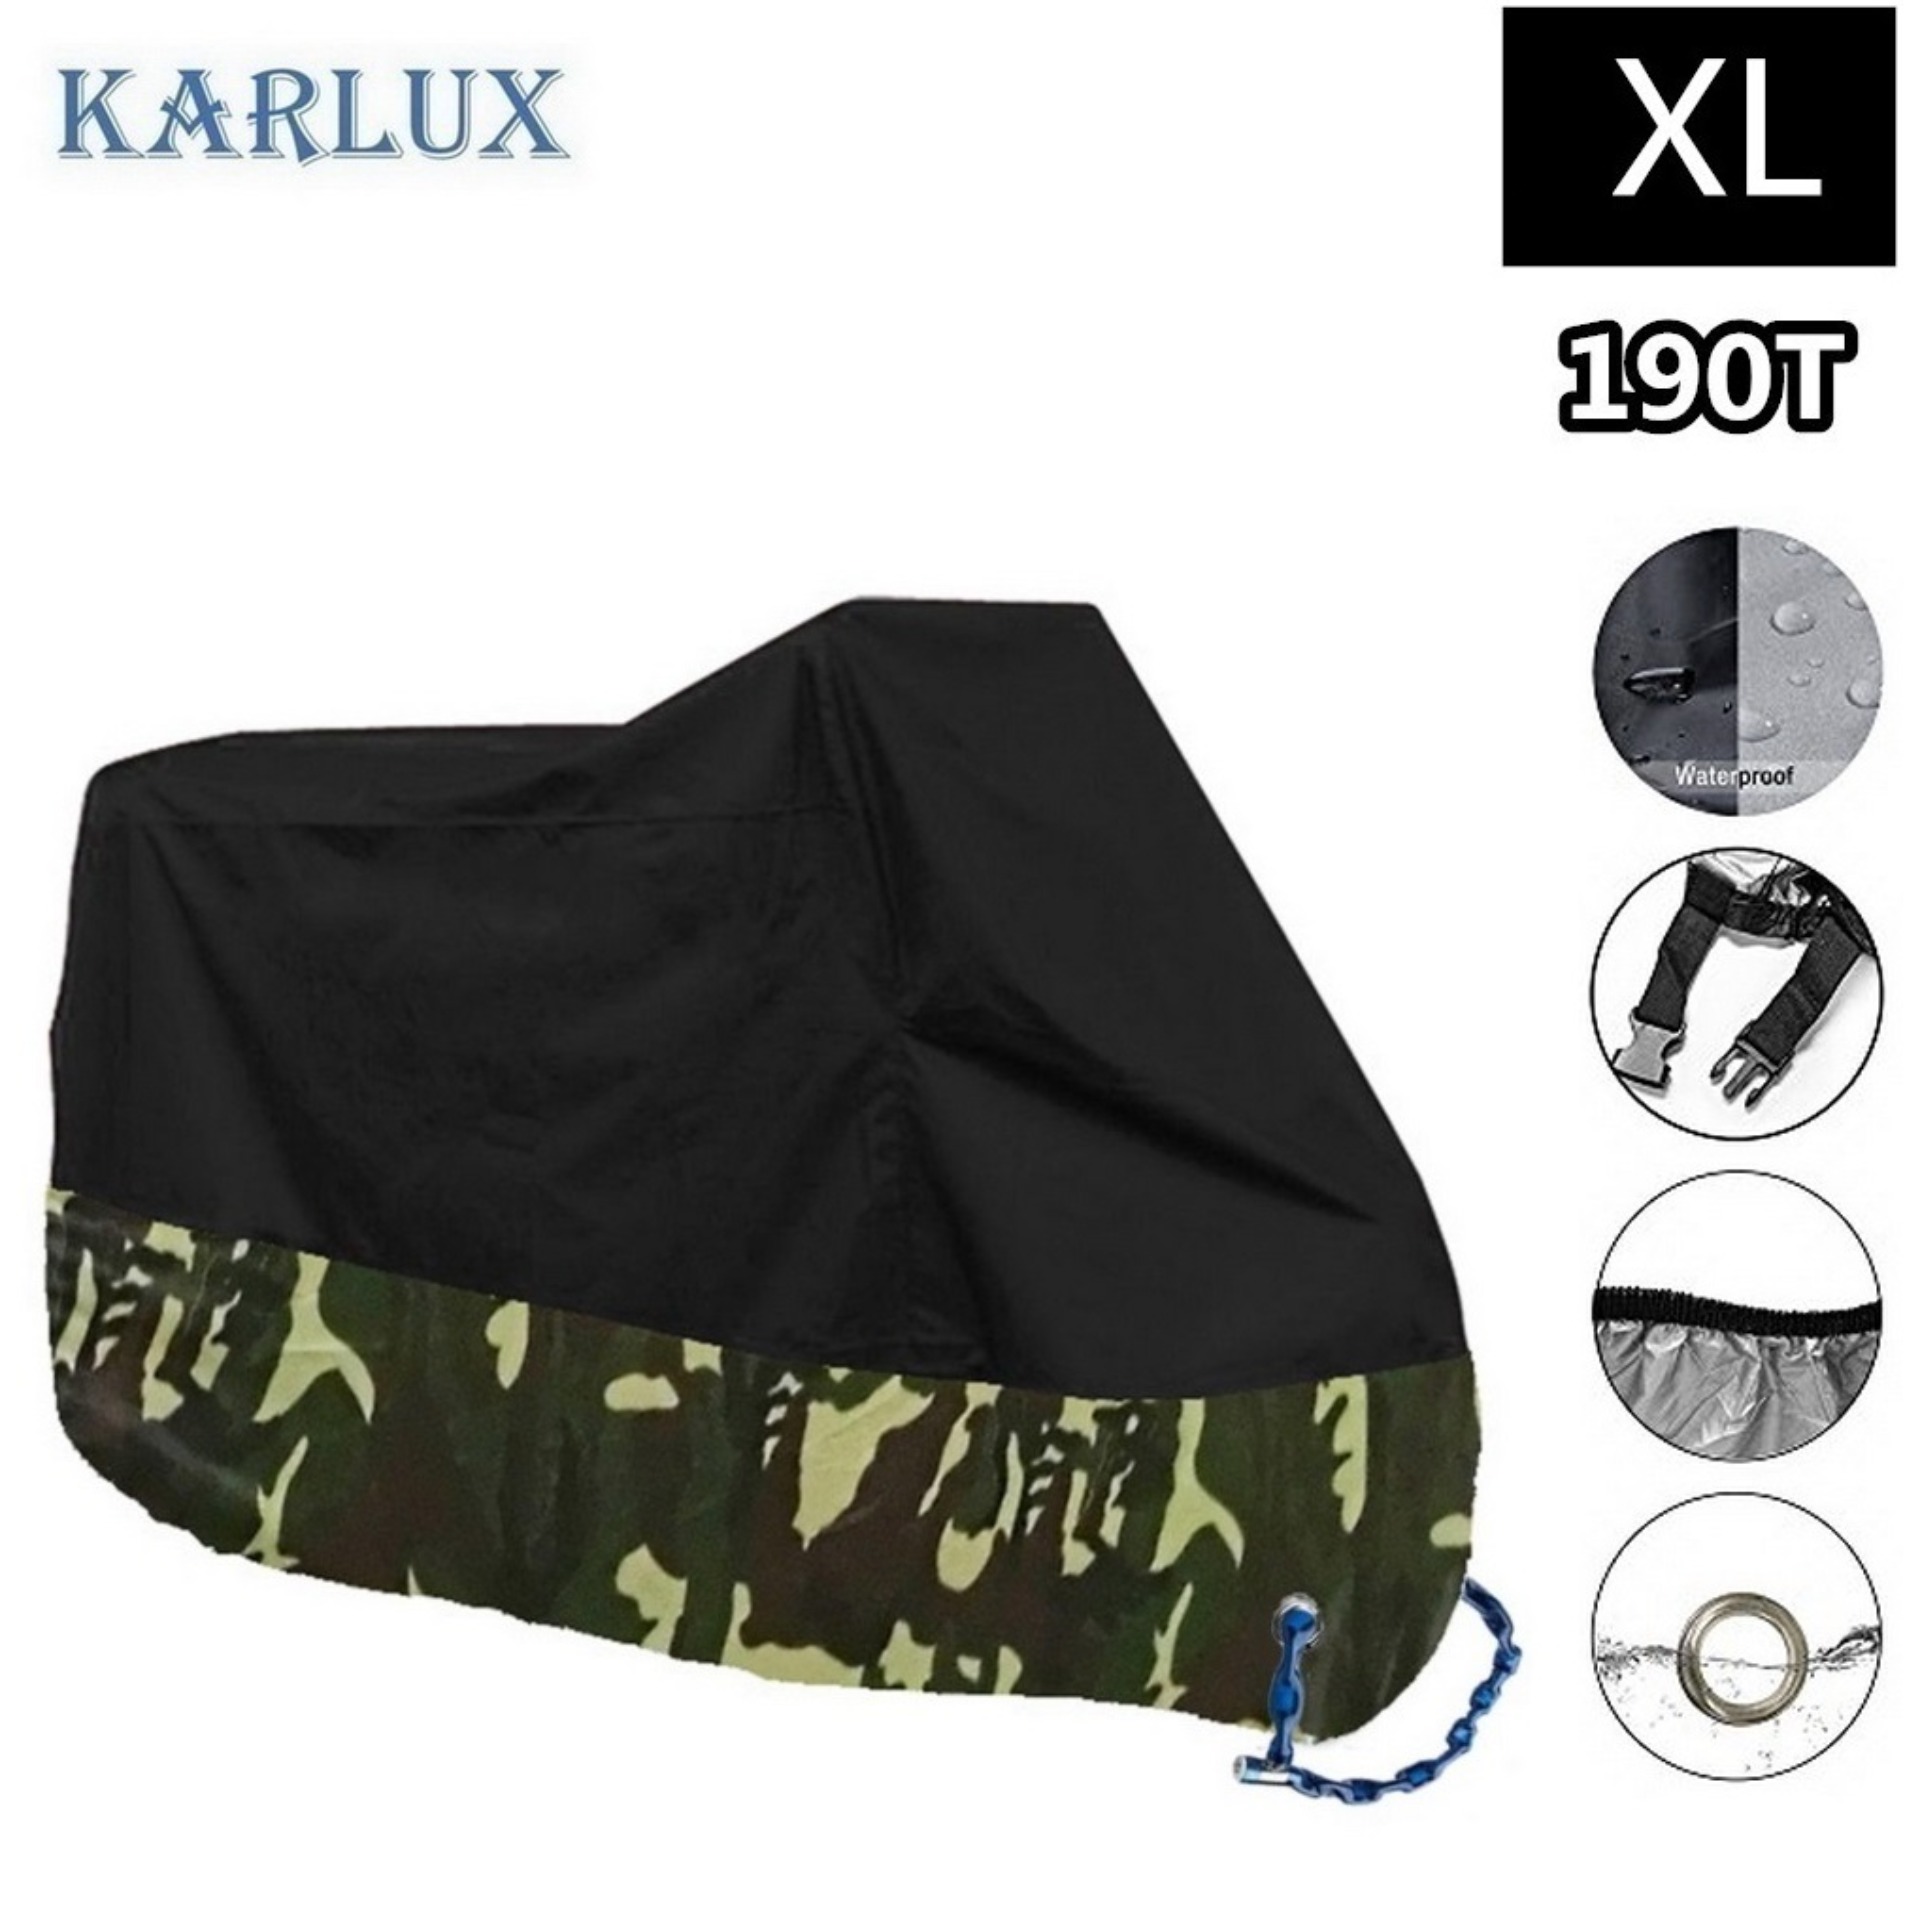 Karlux XL ผ้าคลุมรถมอเตอร์ไซค์ บิ๊กไบค์ จักยาน กันน้ำ กันแดด กันฝุ่น สีดำ/ลายทหาร Black Motorbike Waterproof Cover Protector Case Cover Rain Protection Breathable